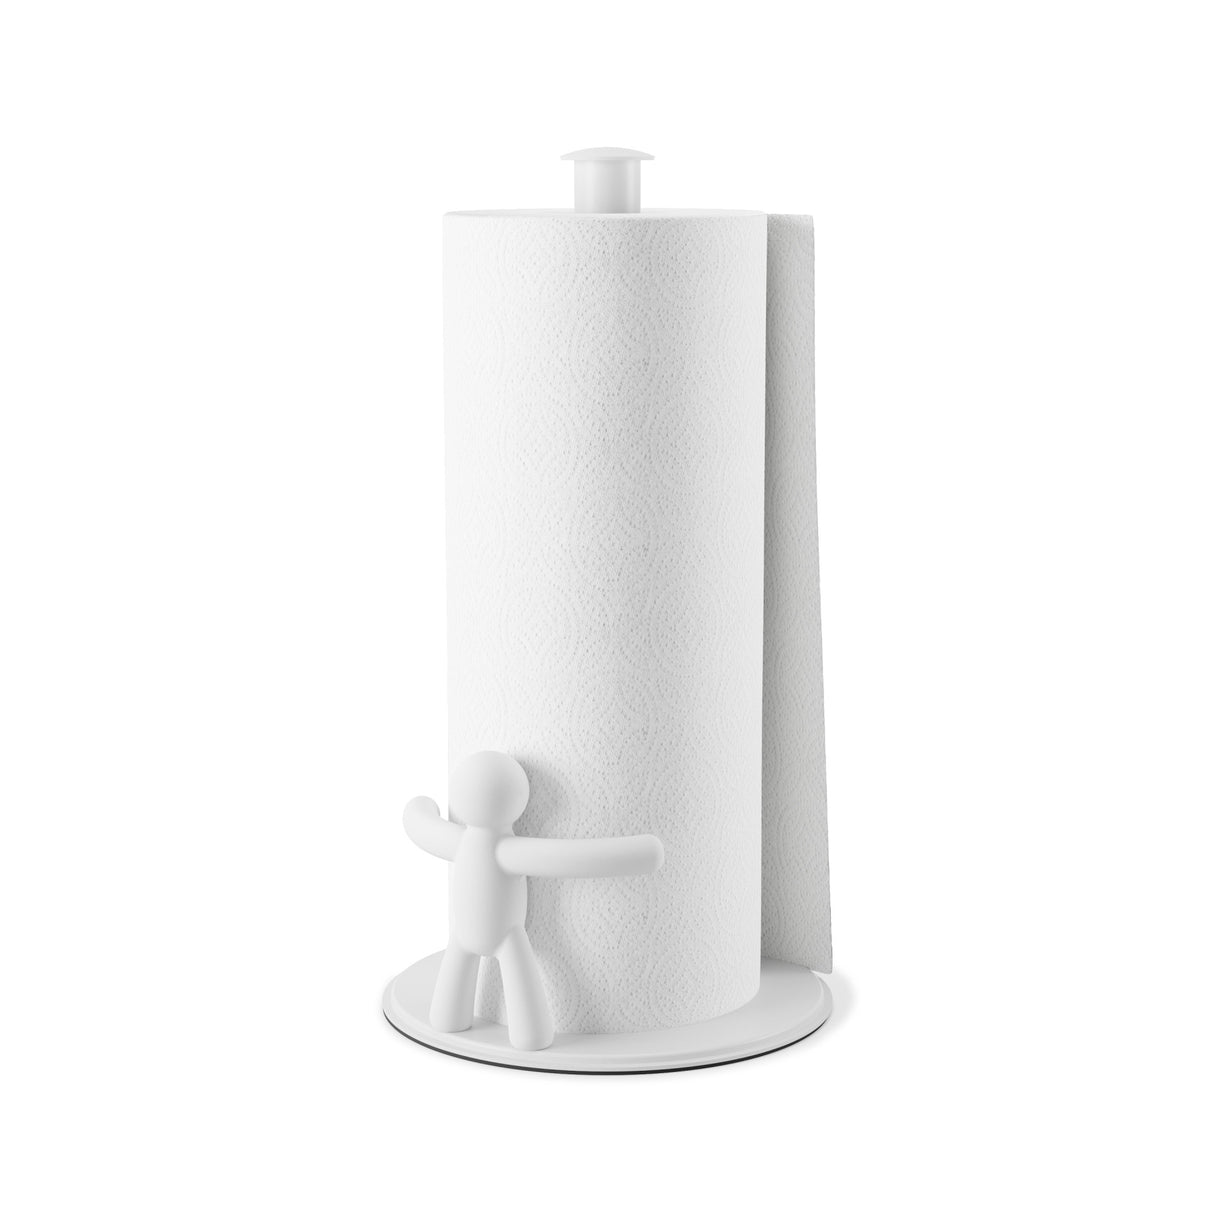 simplehuman tension arm paper towel holder & dispenser, brushed stainless  steel